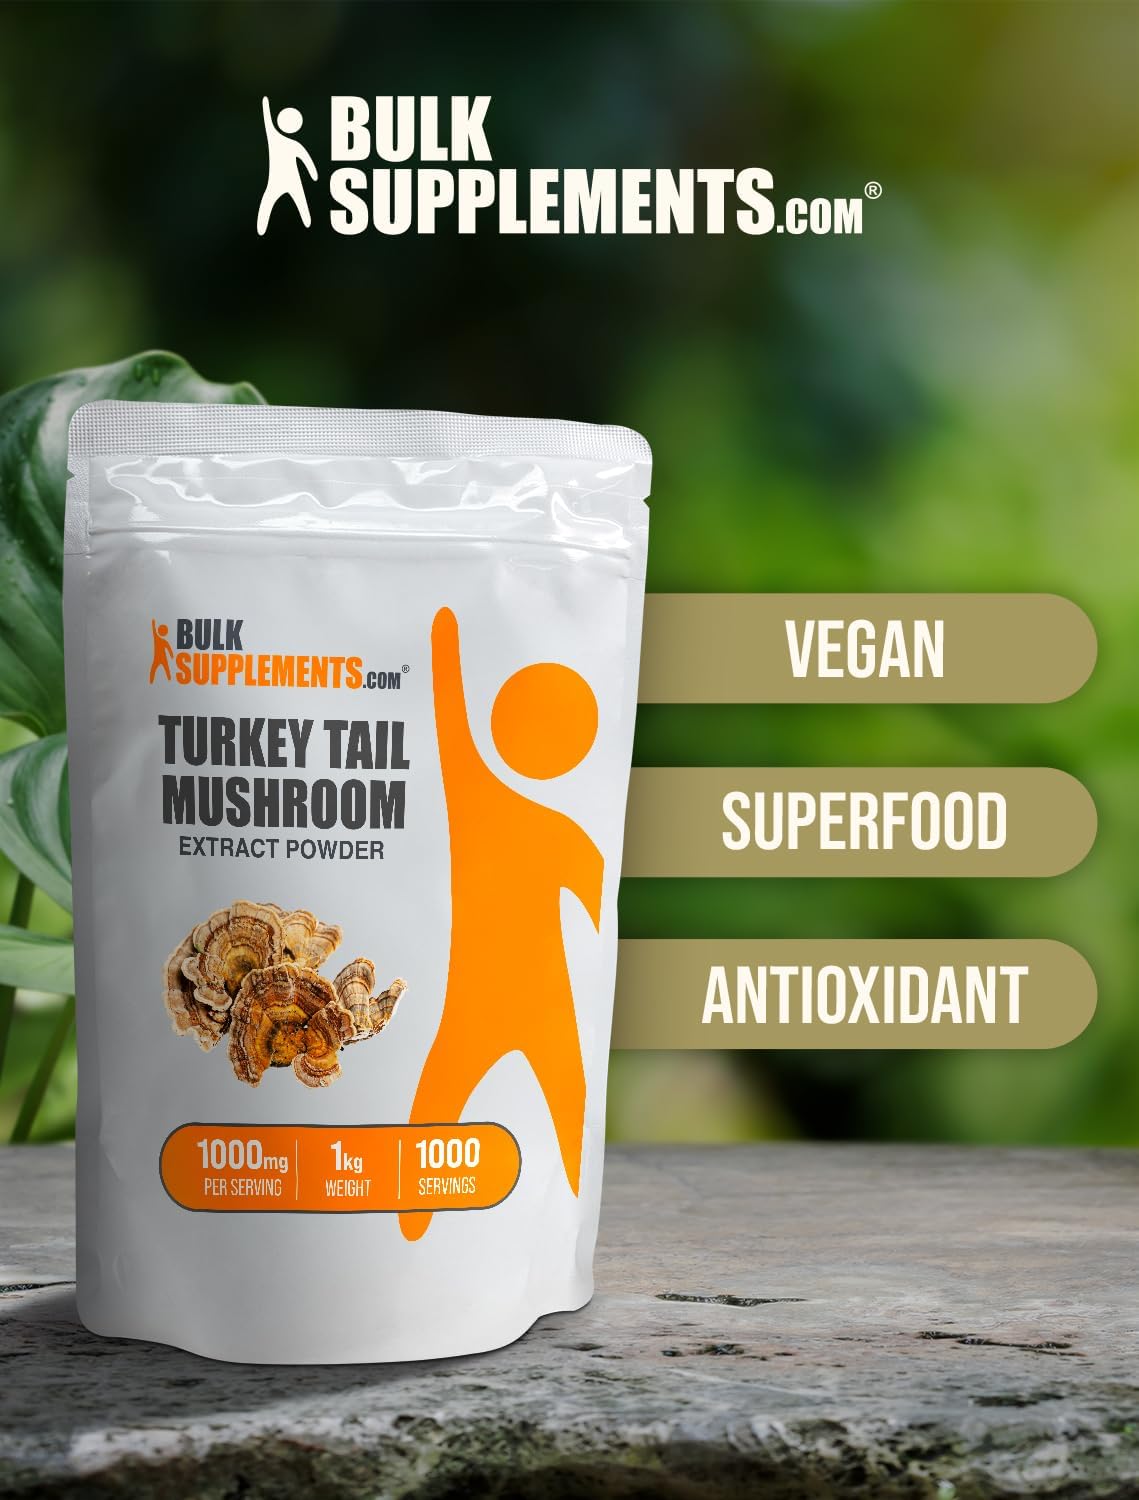 BULKSUPPLEMENTS.COM Turkey Tail Mushroom Extract Powder - Coriolus Versicolor Extract, Turkey Tail Mushroom Powder - Vegan & Gluten Free, 1000mg per Serving. 1kg (2.2 lbs) (Pack of 1) : Health & Household